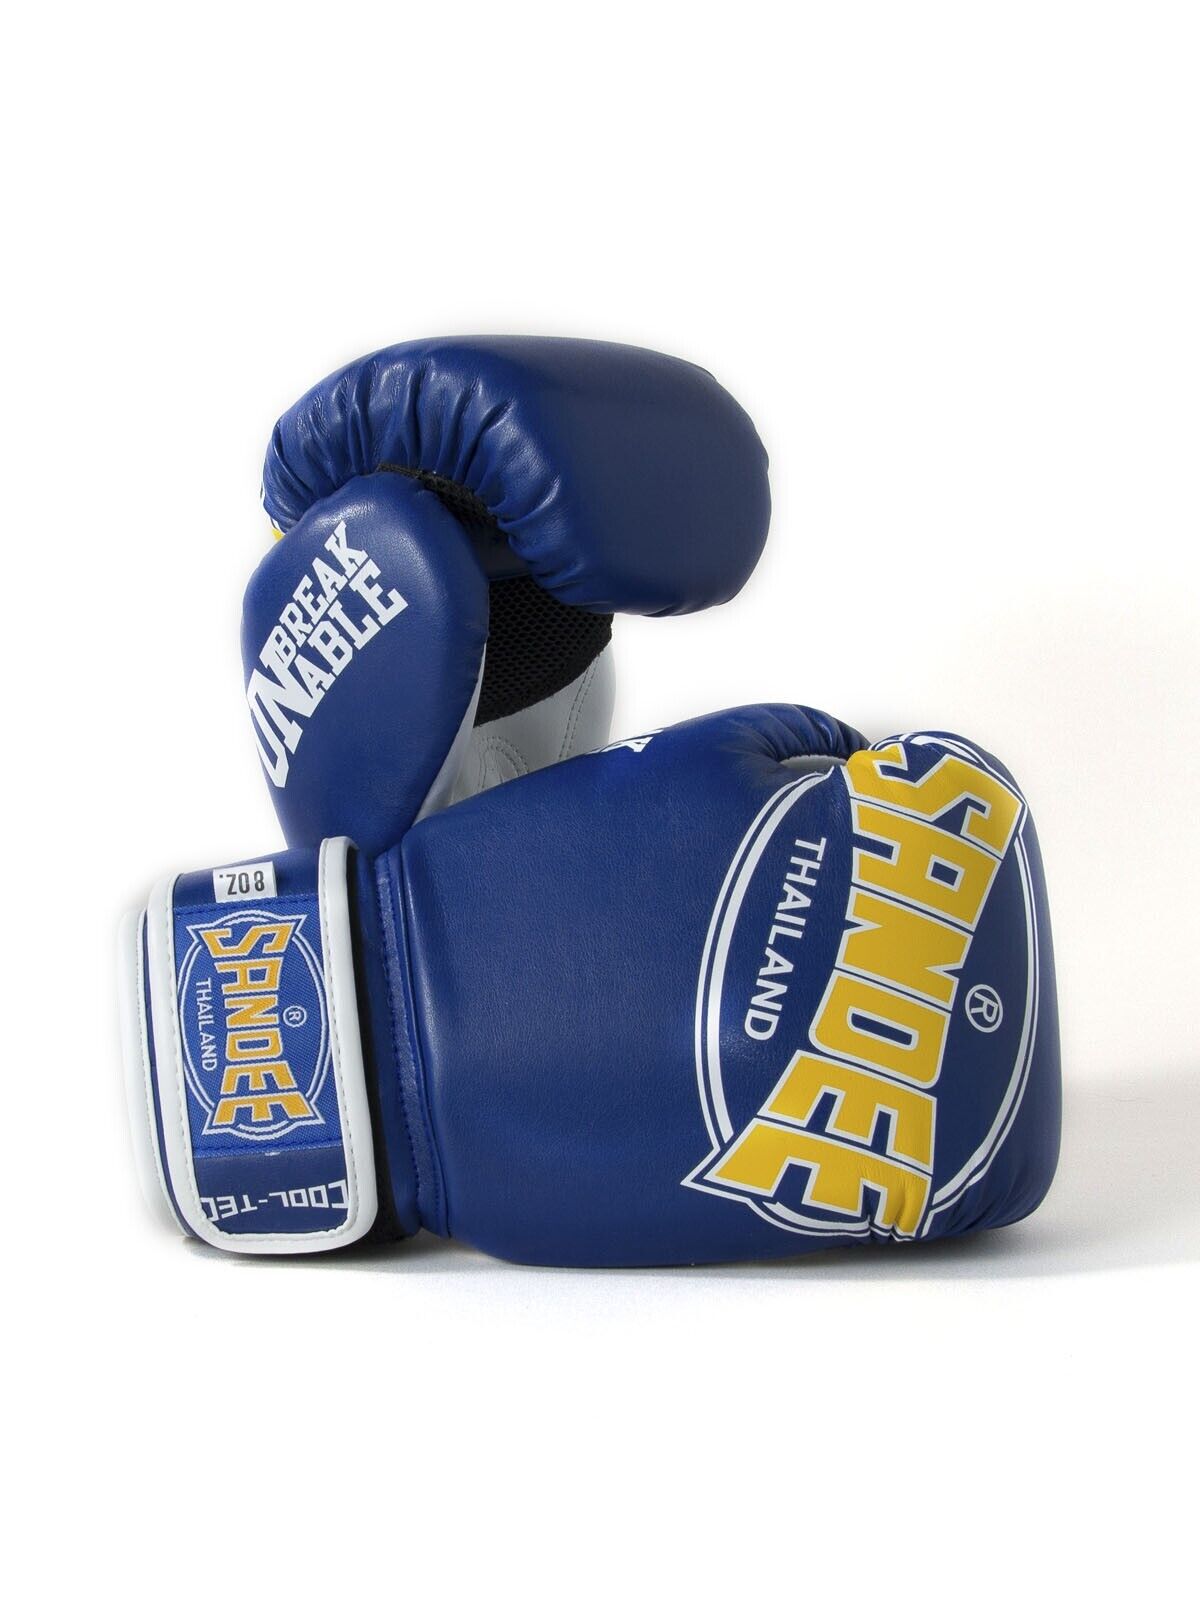 Sandee Kids Cool-Tec Boxing Gloves Muay Thai Kickboxing - Budo Online